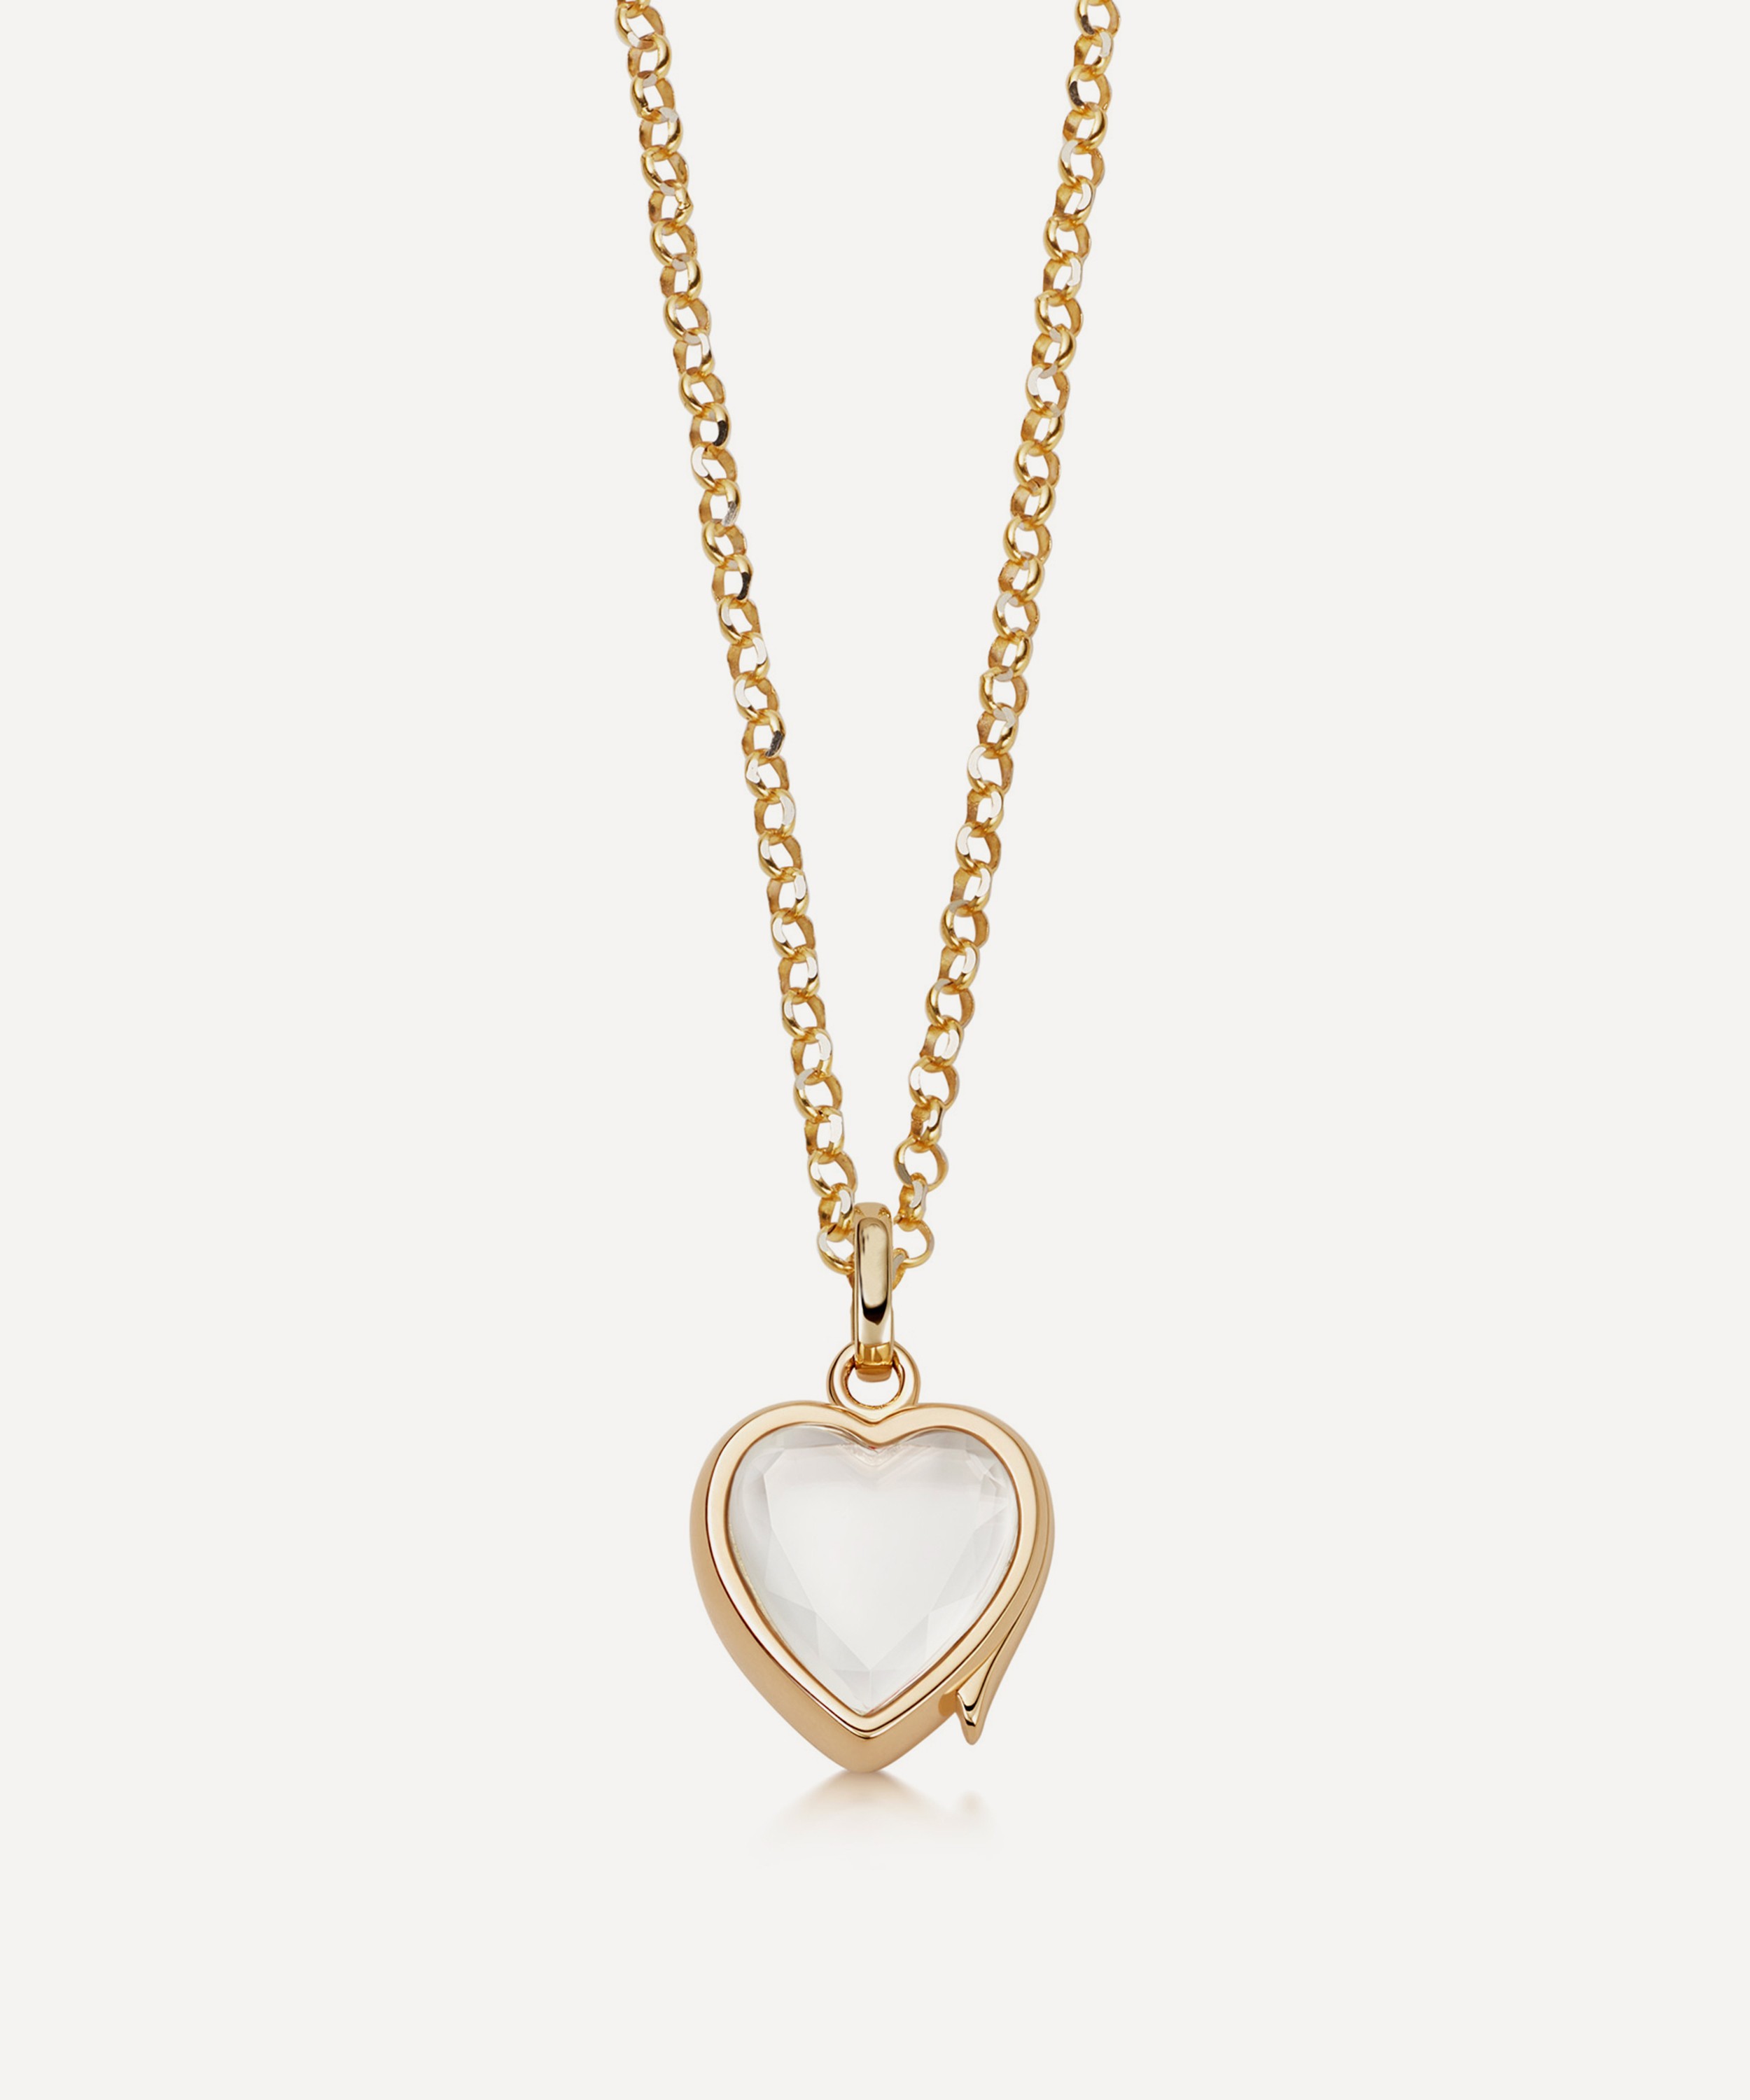 Loquet London - 14ct Gold Small Heart Locket